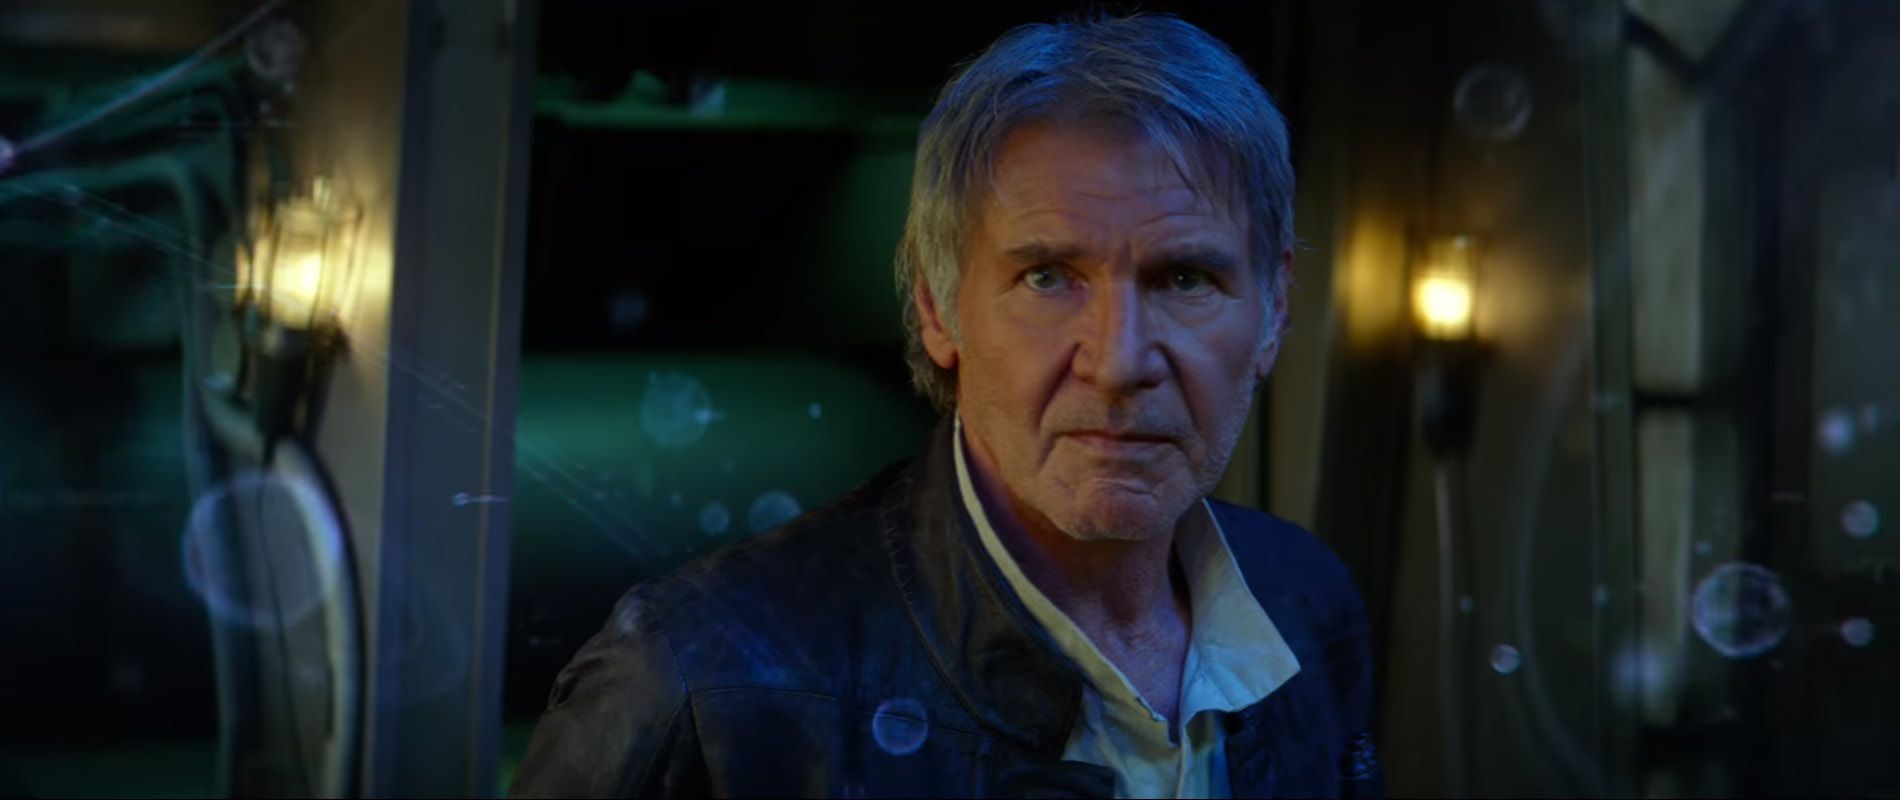 Star Wars 7 Trailer #3 - Han Solo (Harrison Ford)